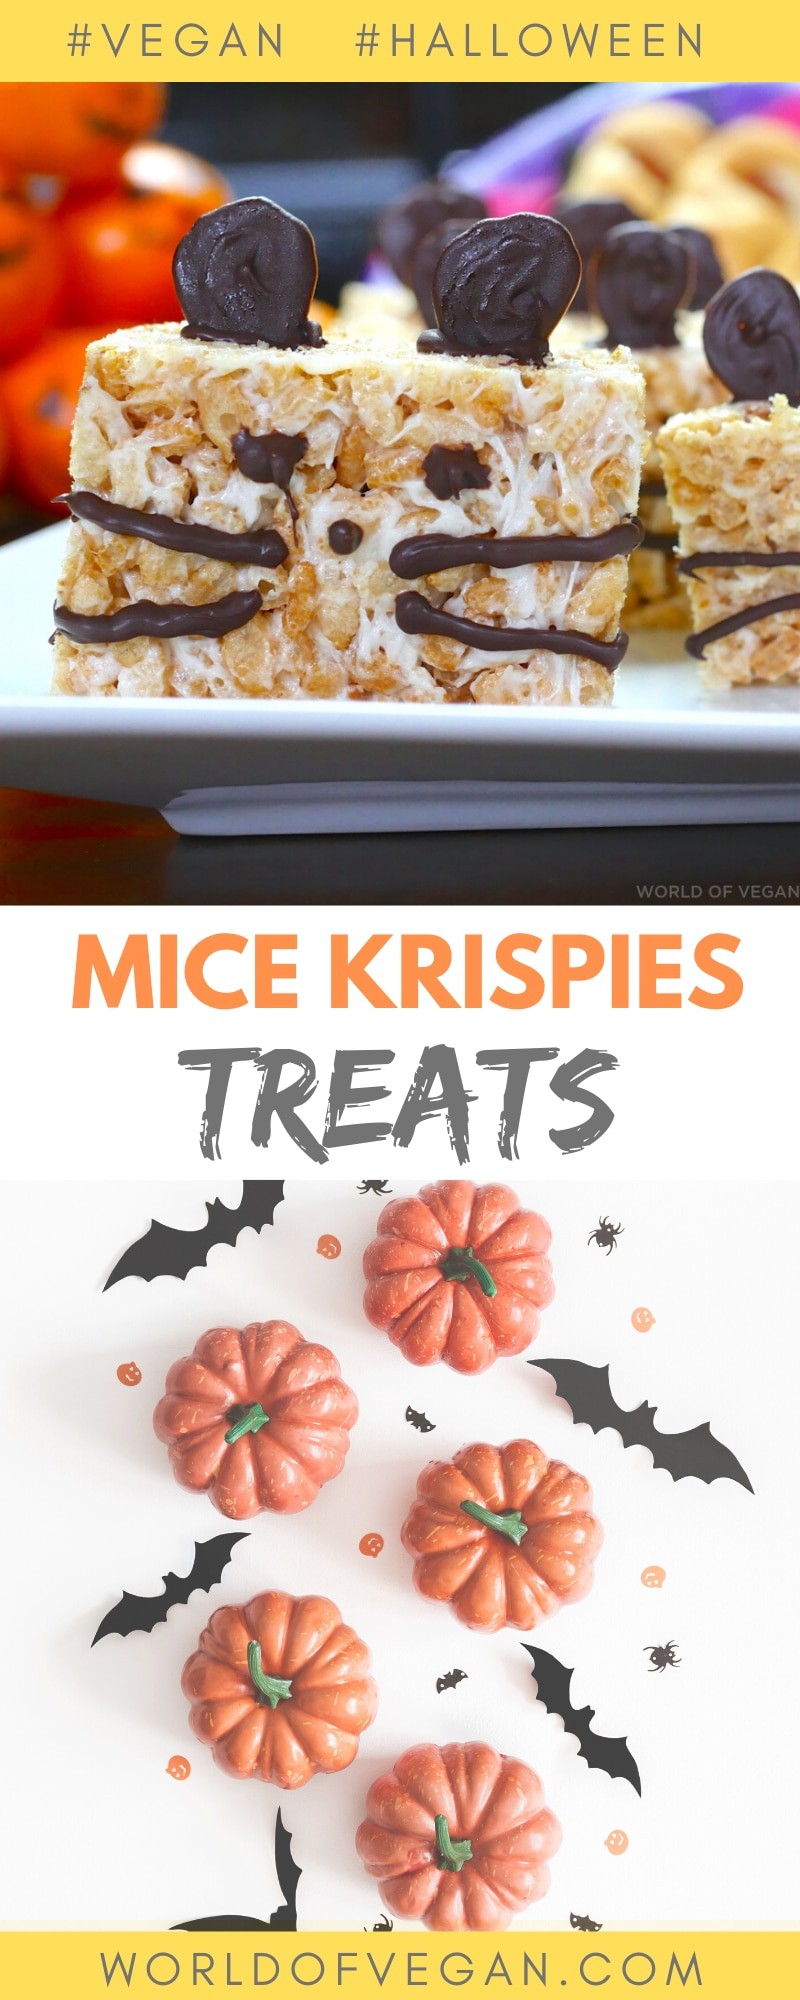 Halloween Mice Krispies Vegan Treats | World of Vegan | #vegan #halloween #treats #rice #krispies #mice #worldofvegan